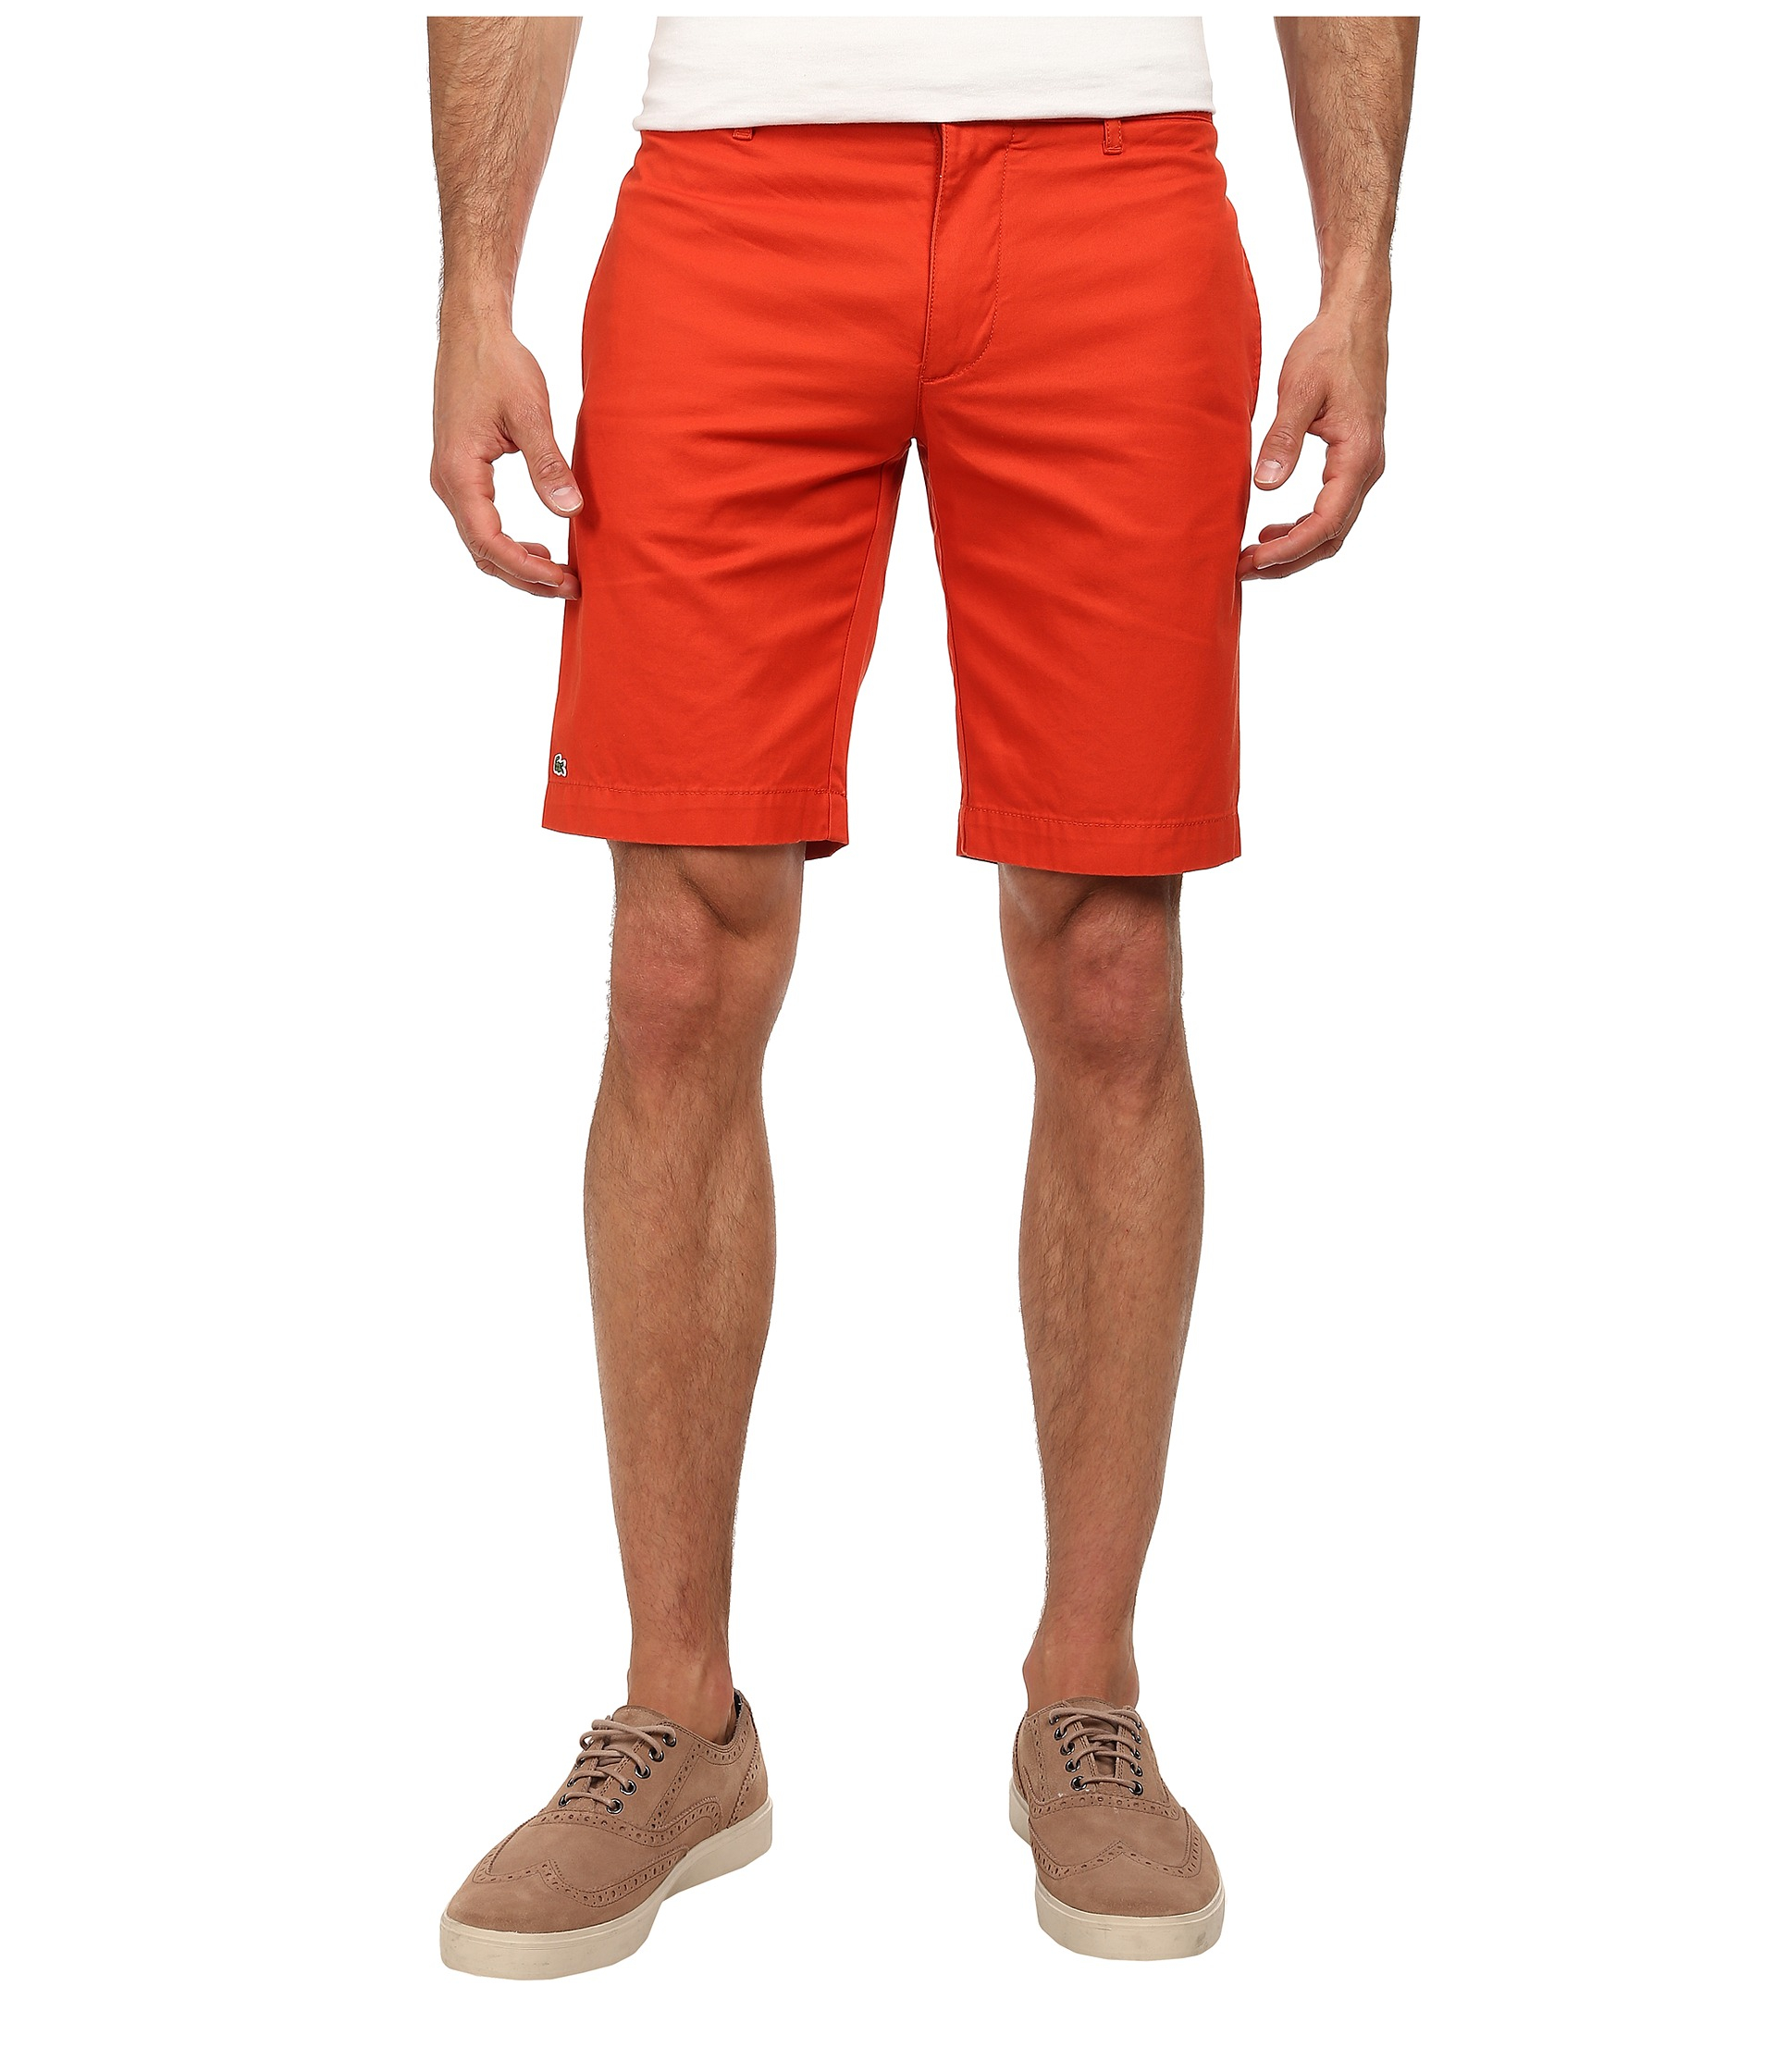 Lyst - Lacoste Slim Fit Bermuda Short in Orange for Men